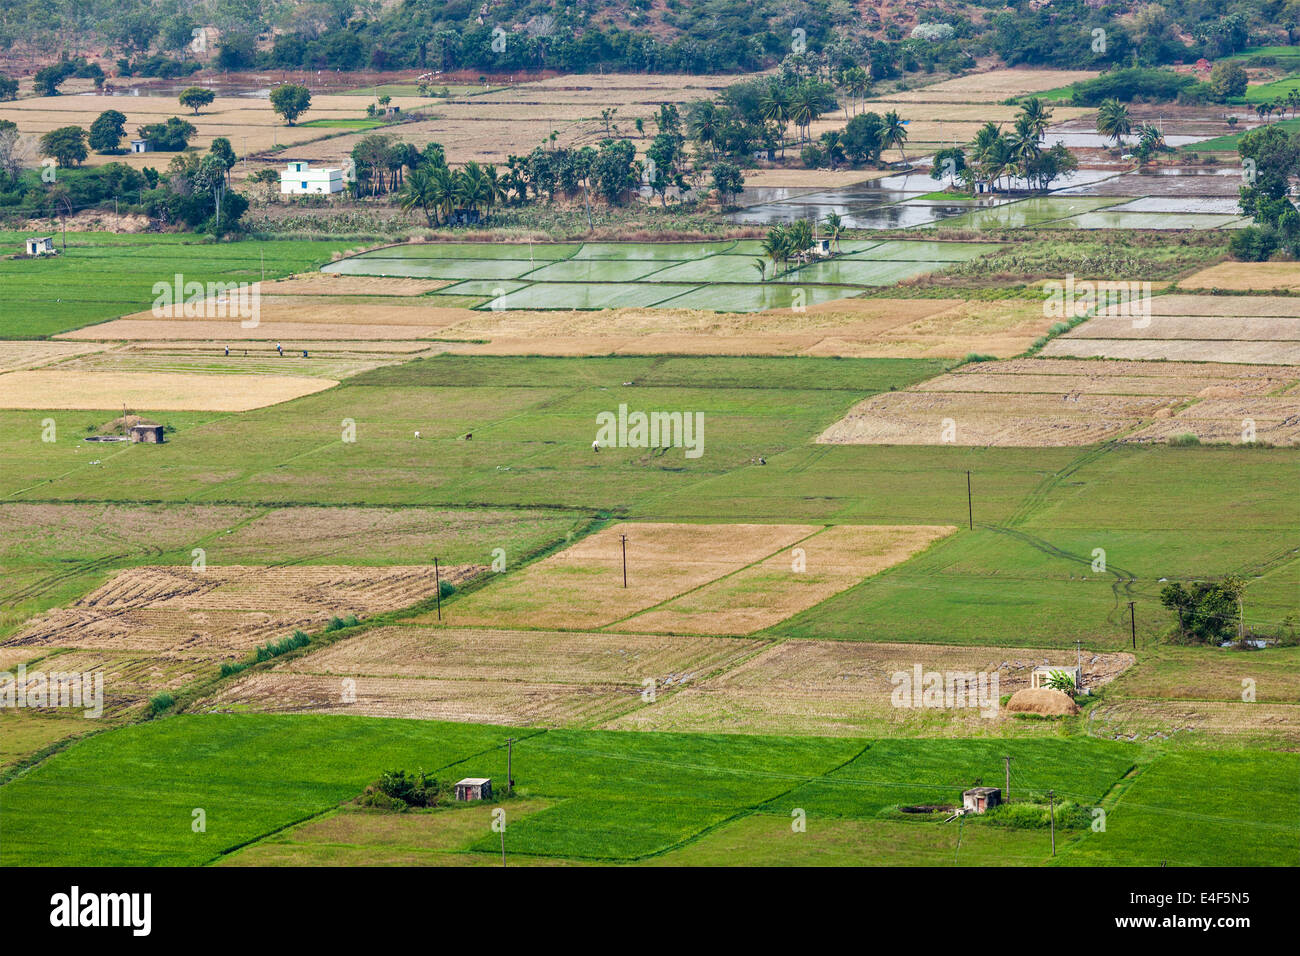 Aeiral view of Indian countryside with rice paddies. Near Thirukalukundram, Tamil Nadu, India Stock Photo